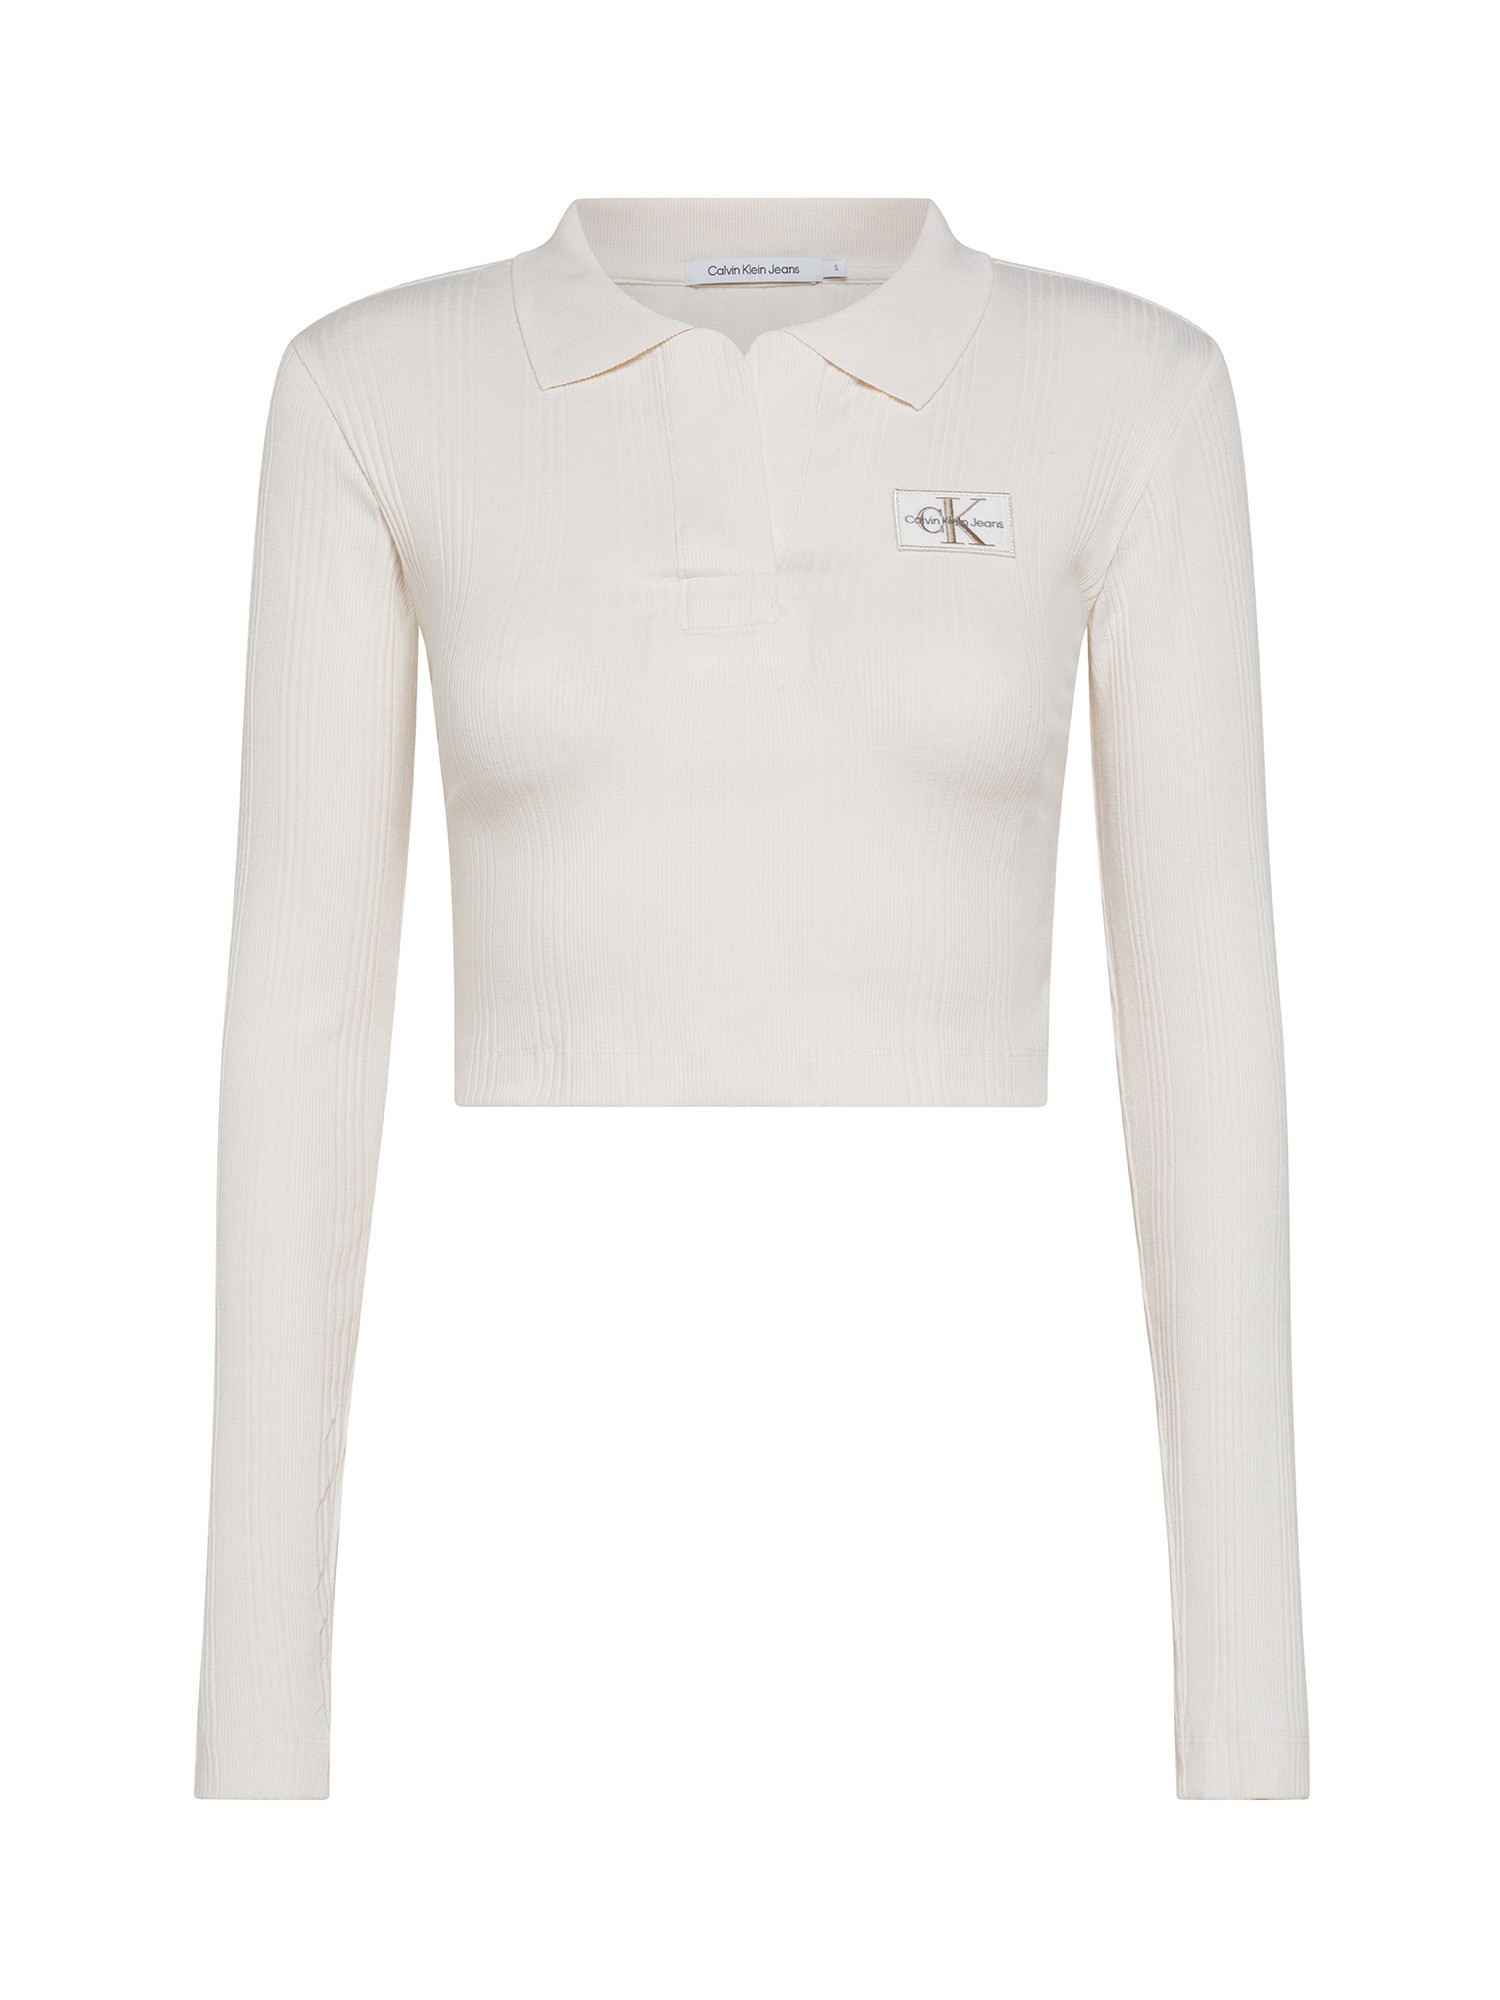 Calvin Klein Jeans - Maglia a costine con logo, Bianco avorio, large image number 0